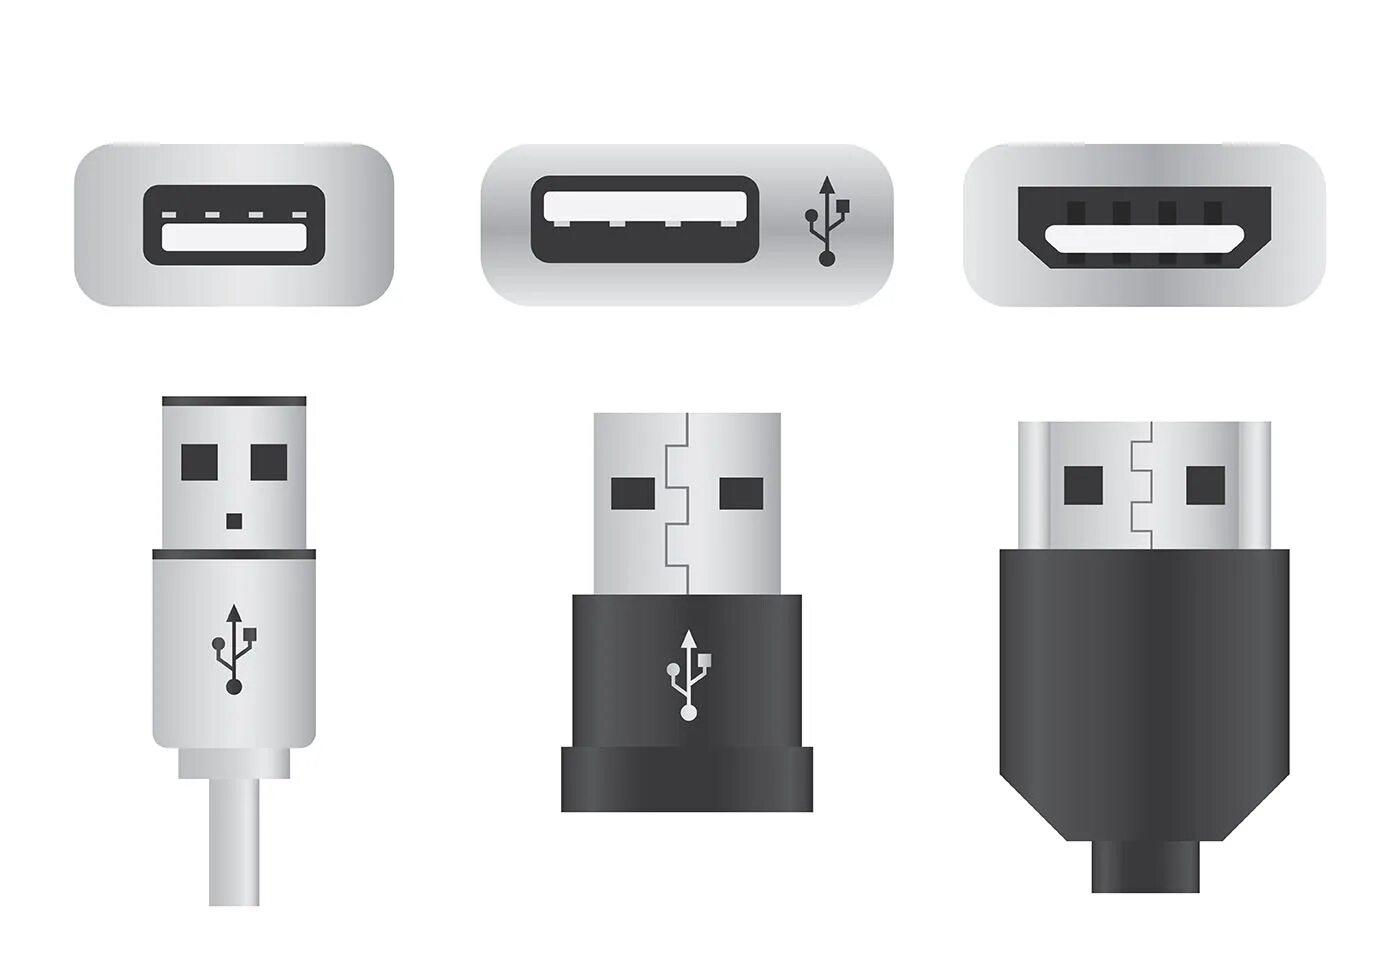 Порт USB разъем Micro-USB (USB 2.0). Юсб порт разъем. Флешка USB, Type-c, Micro USB DNS. Знак USB разъема. Порт для зарядки телефона